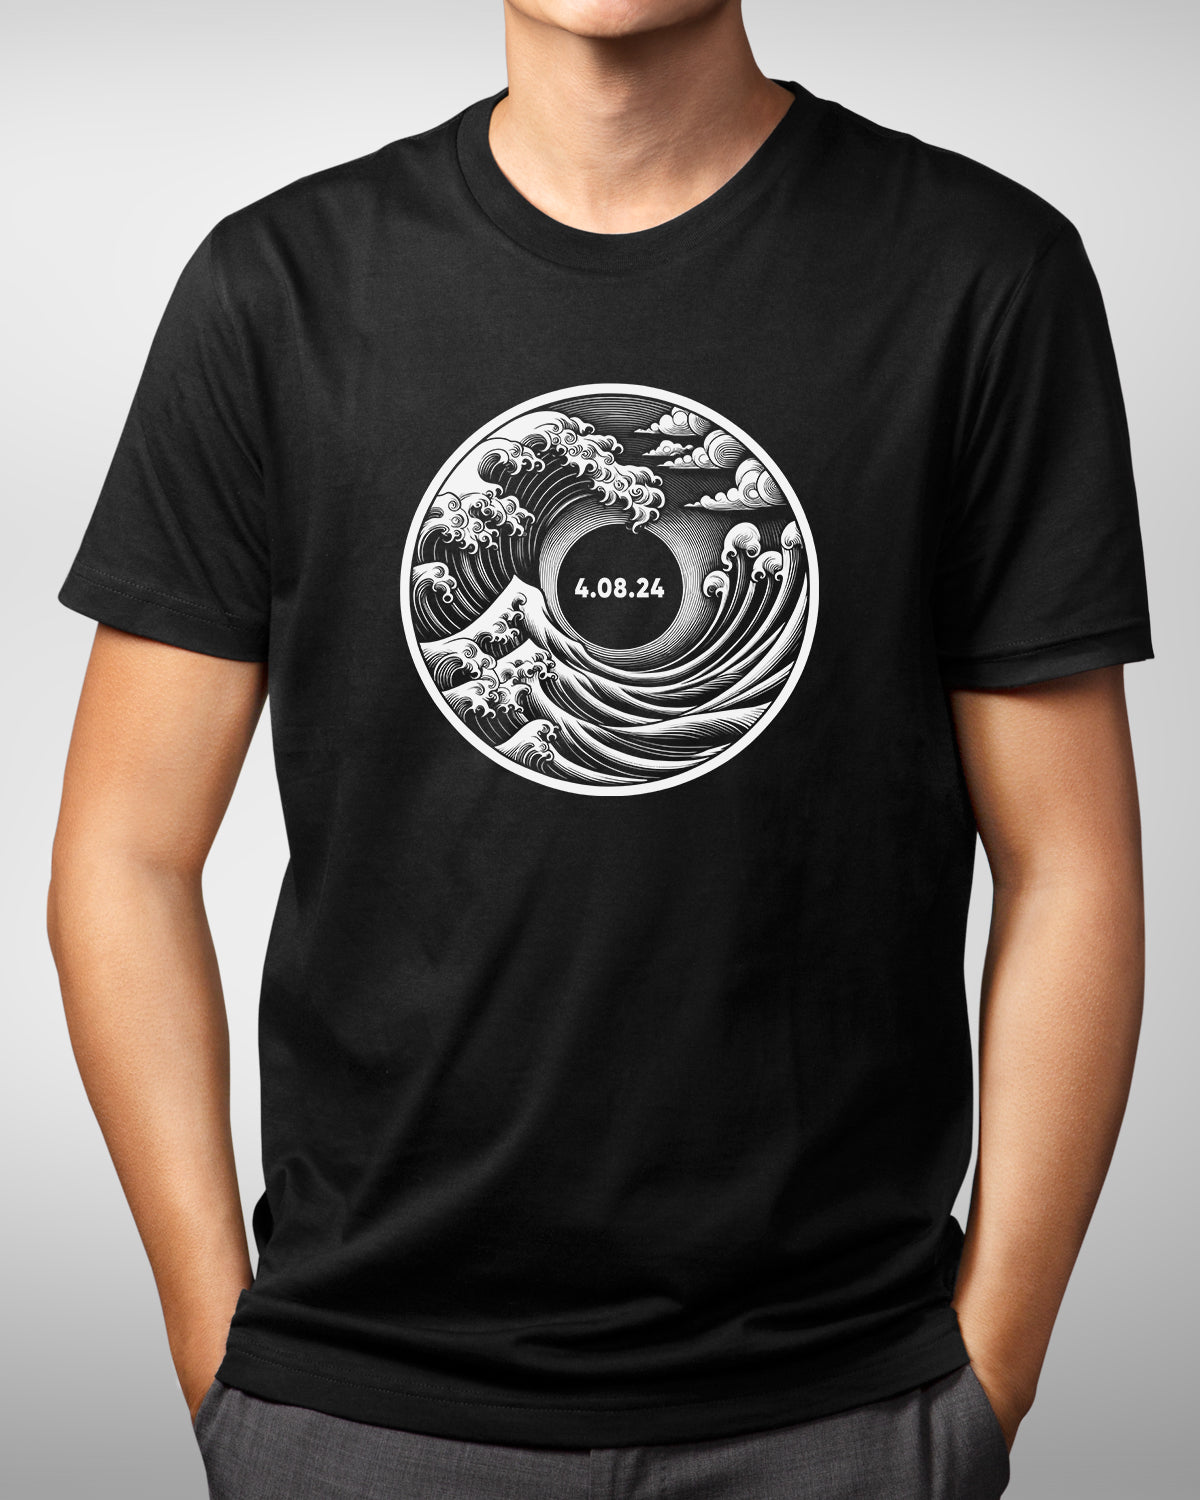 Total Solar Eclipse 2024 Shirt, Great Wave Kanagawa Style, April 8 Eclipse Commemorative, Japanese Ukiyo-e Design, Eclipse Watch Party, Eclipse Souvenir